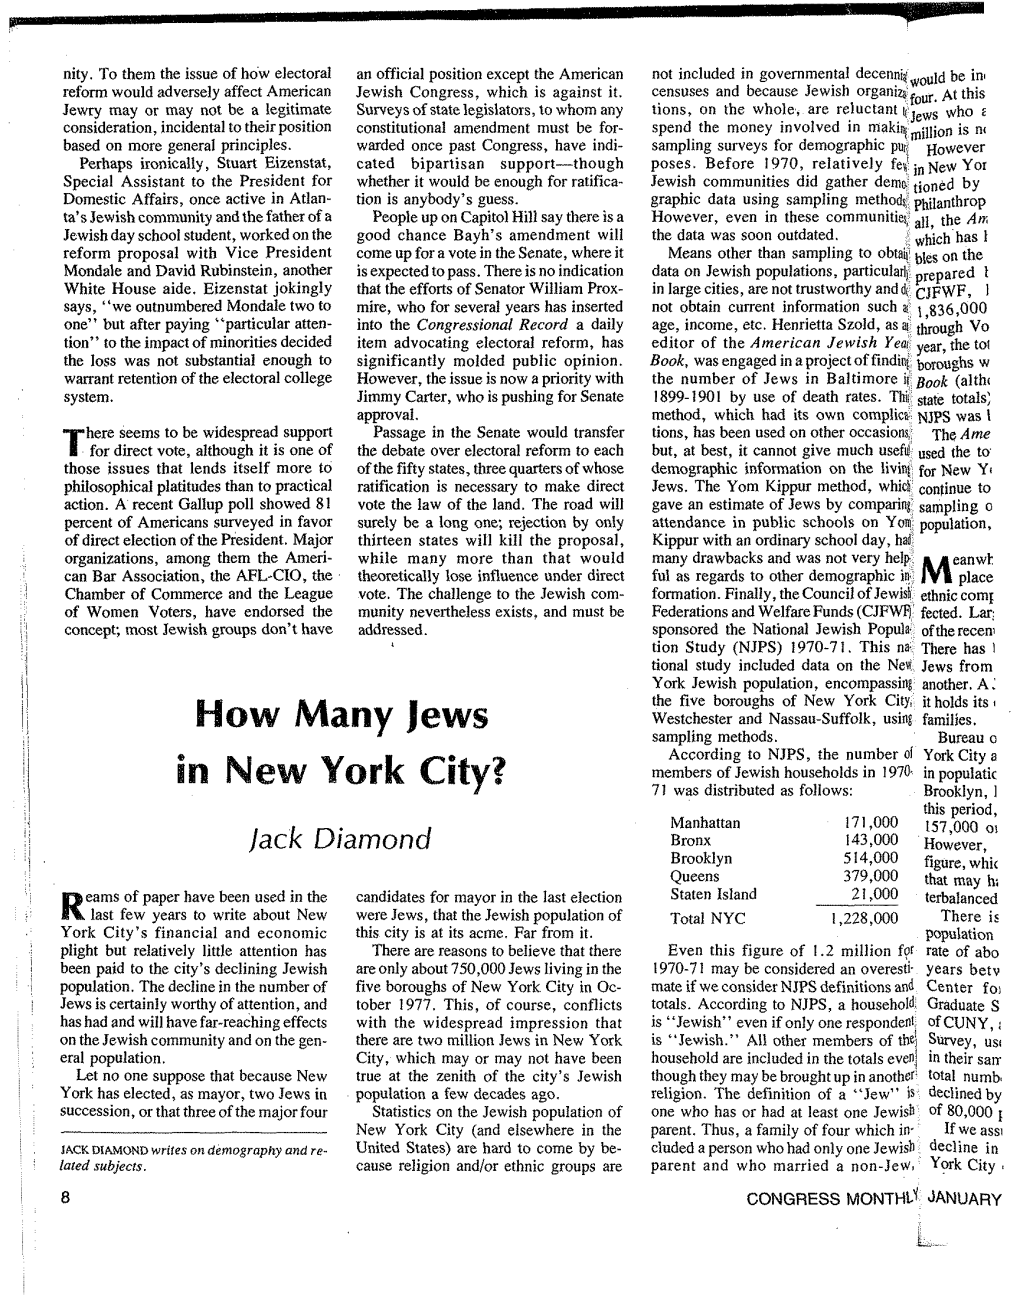 How Many Jews in New York City?